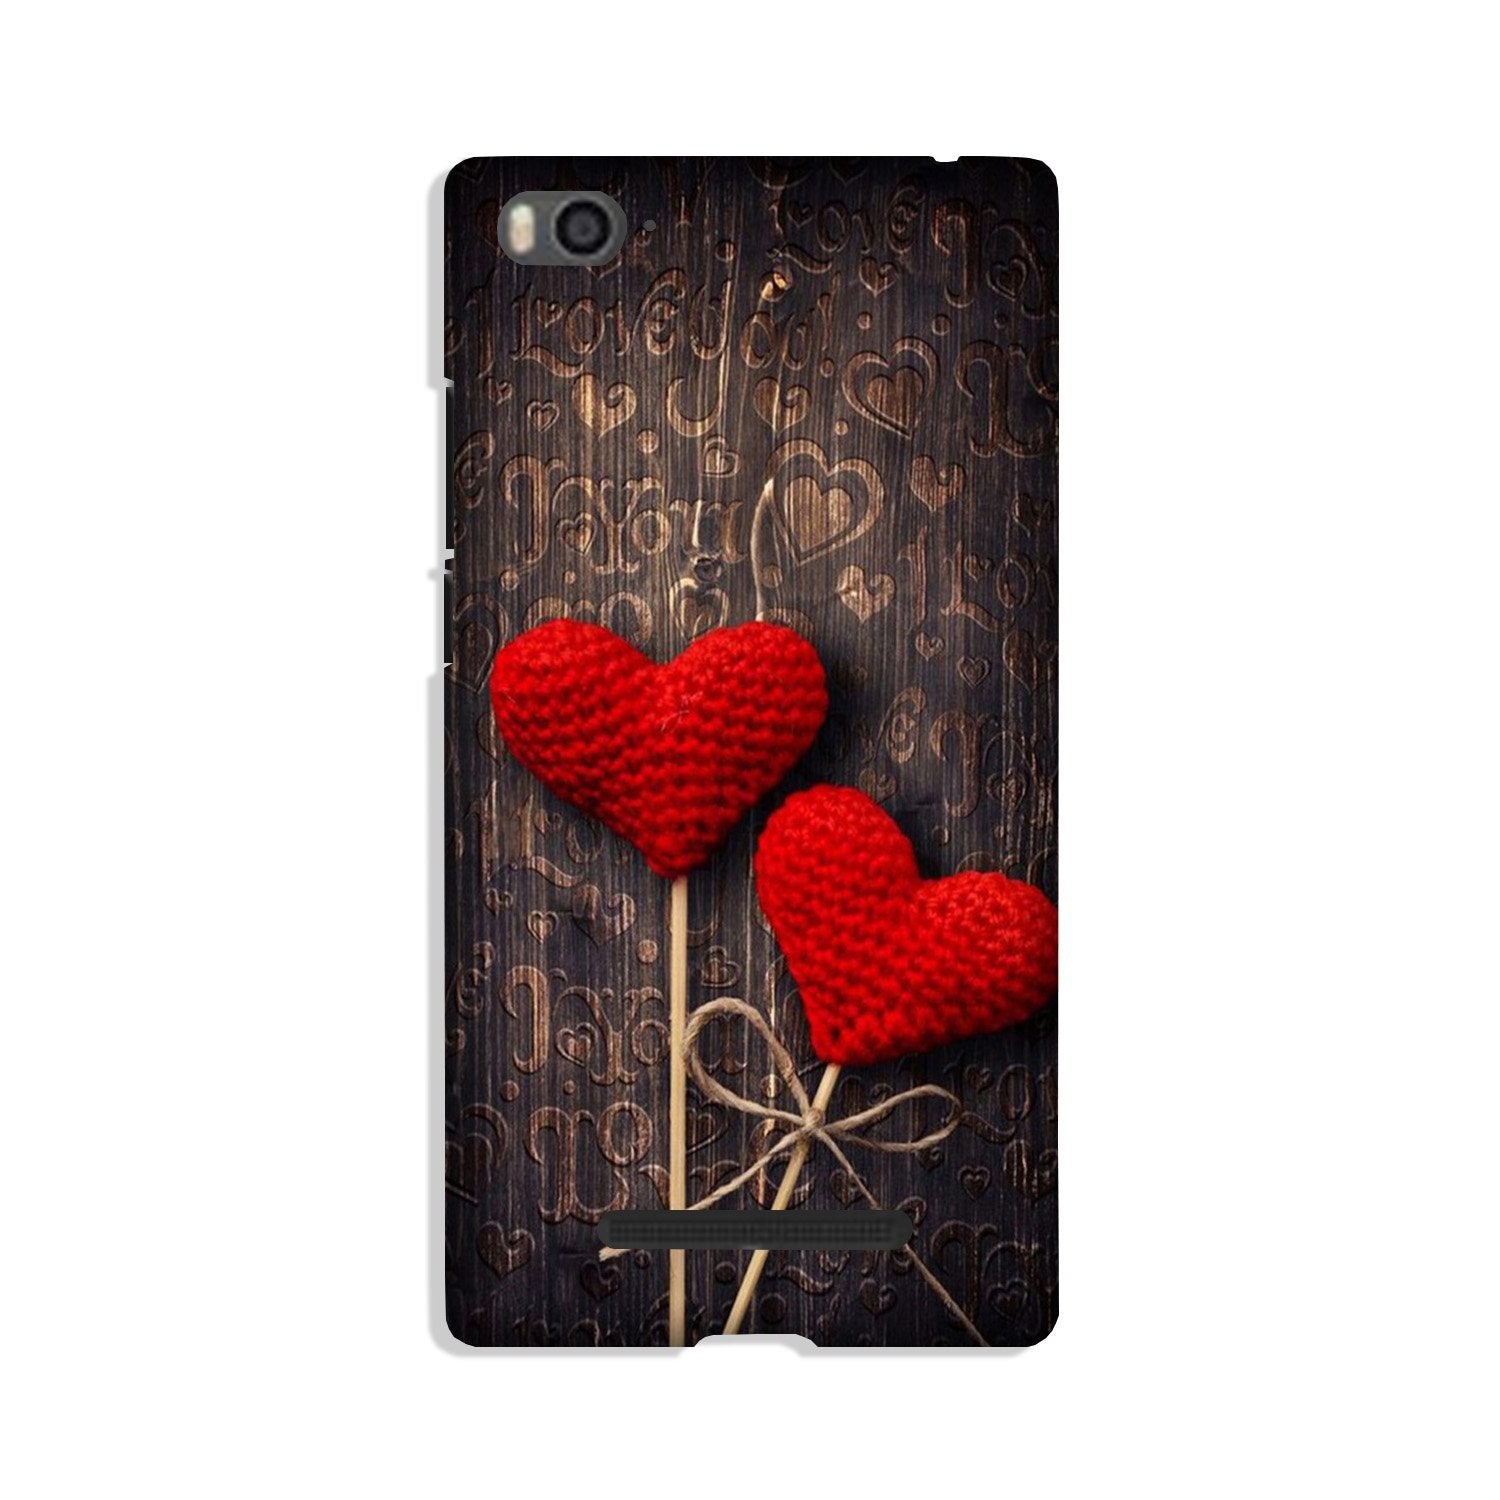 Red Hearts Case for Xiaomi Mi 4i